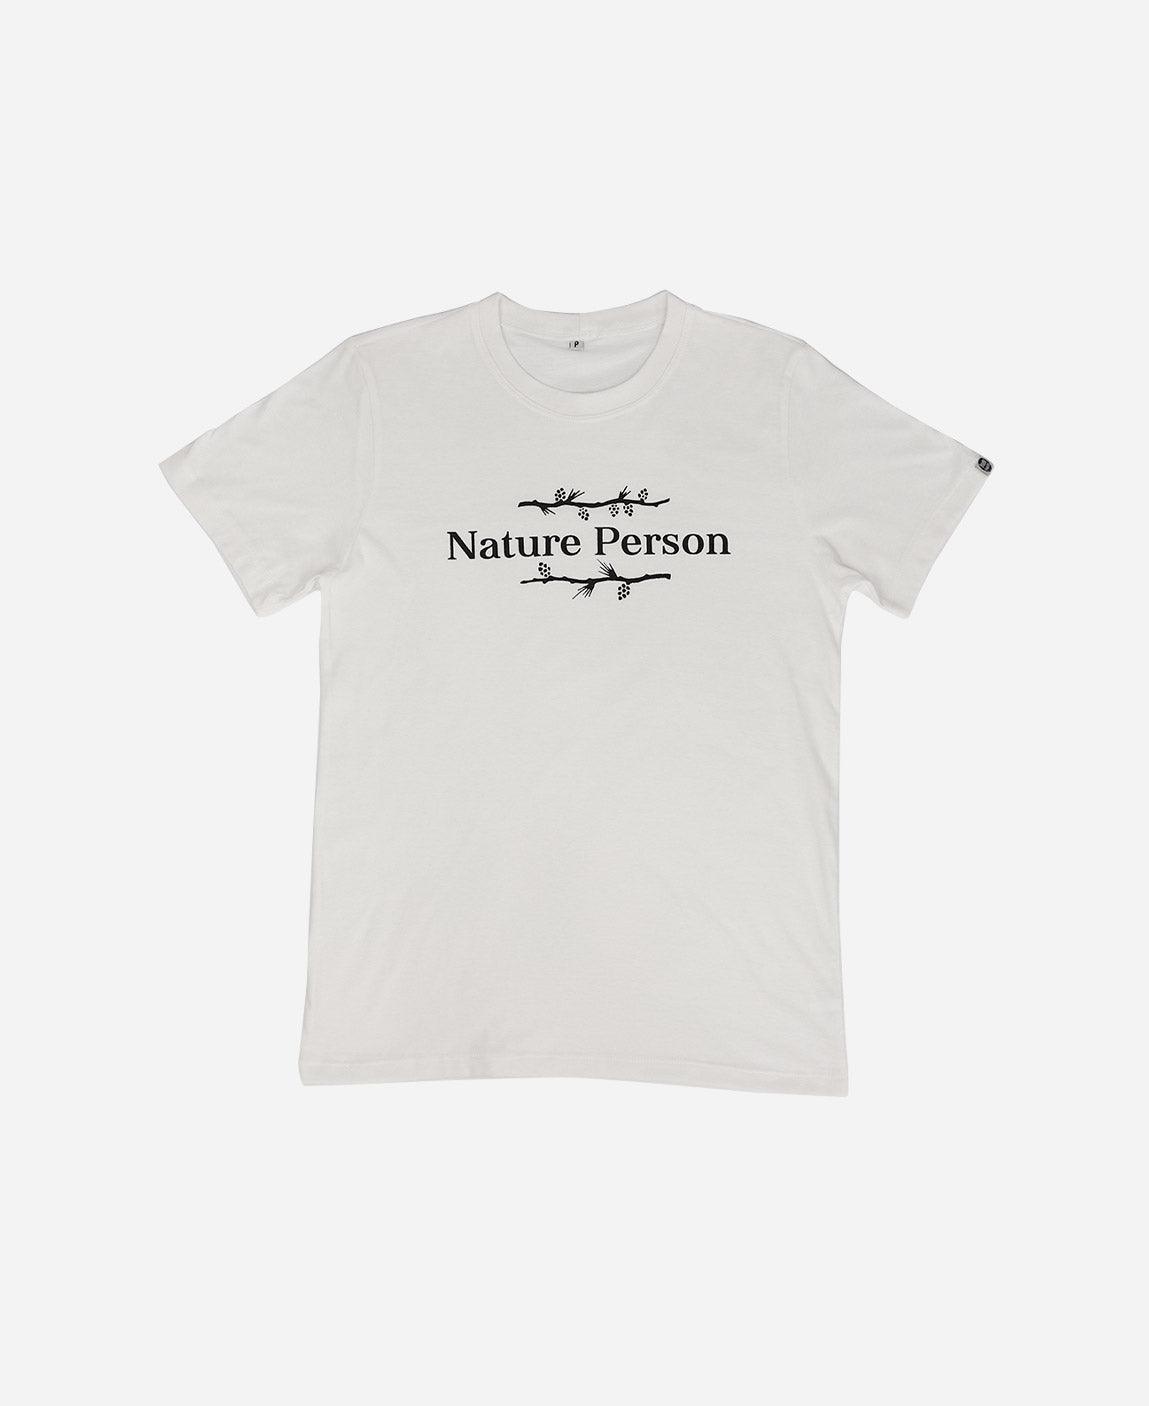 Camiseta Adulto Unissex Nature Person - MiniMalista Baby - b2b, com-desconto-mm10, Meia Estação, Menino, Neutro, Unissex -bebê-minimalista-estiloso